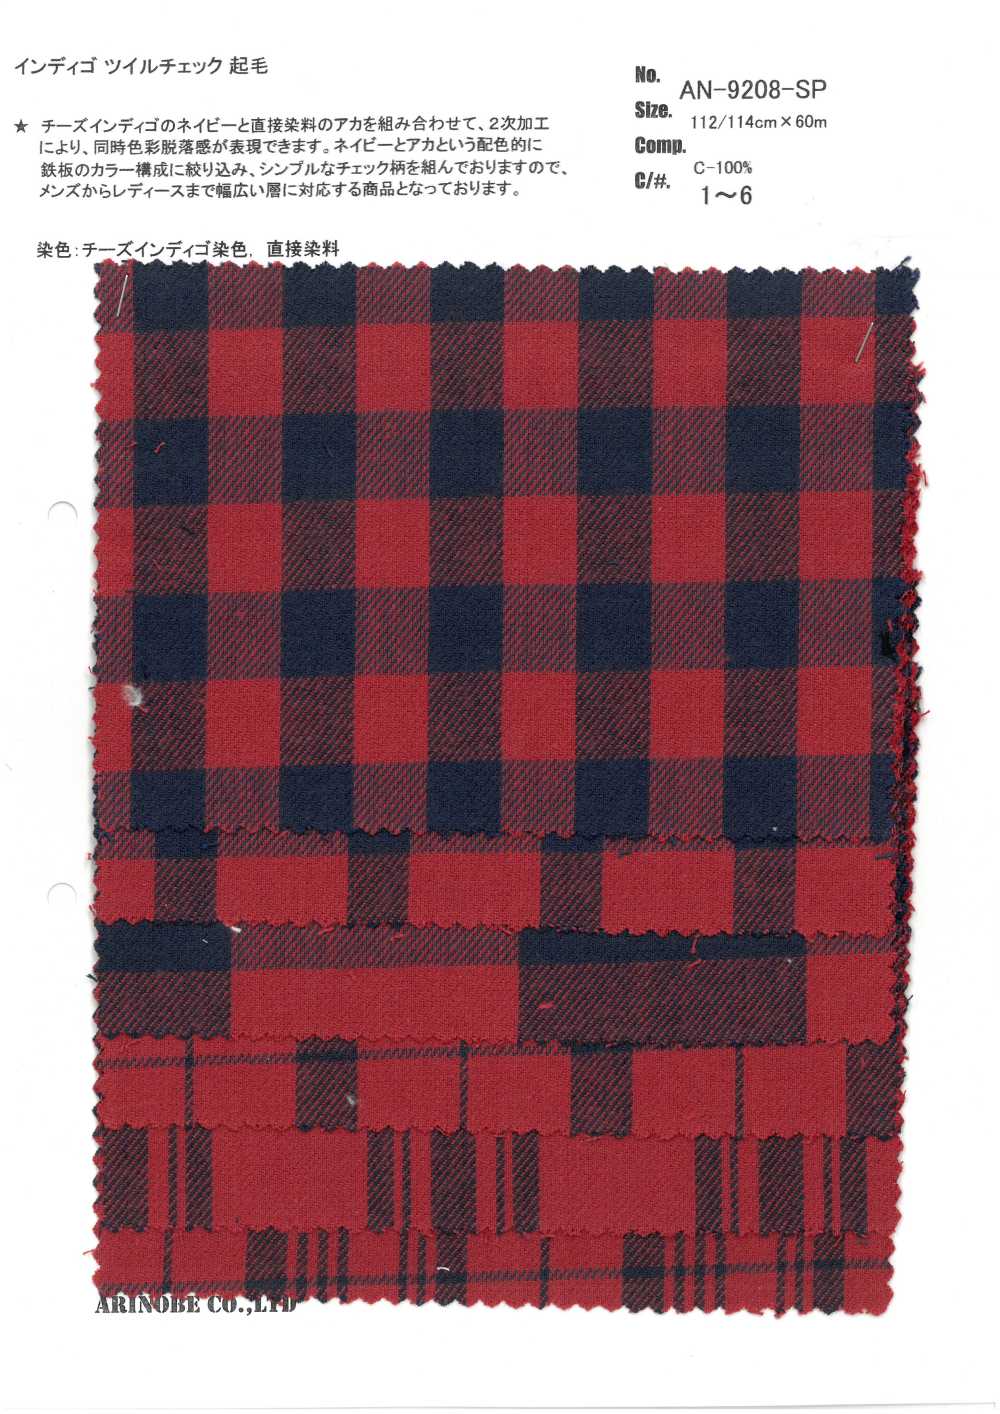 AN-9208SP Indigo Twill Check (Fuzzy)[Textile / Fabric] ARINOBE CO., LTD.